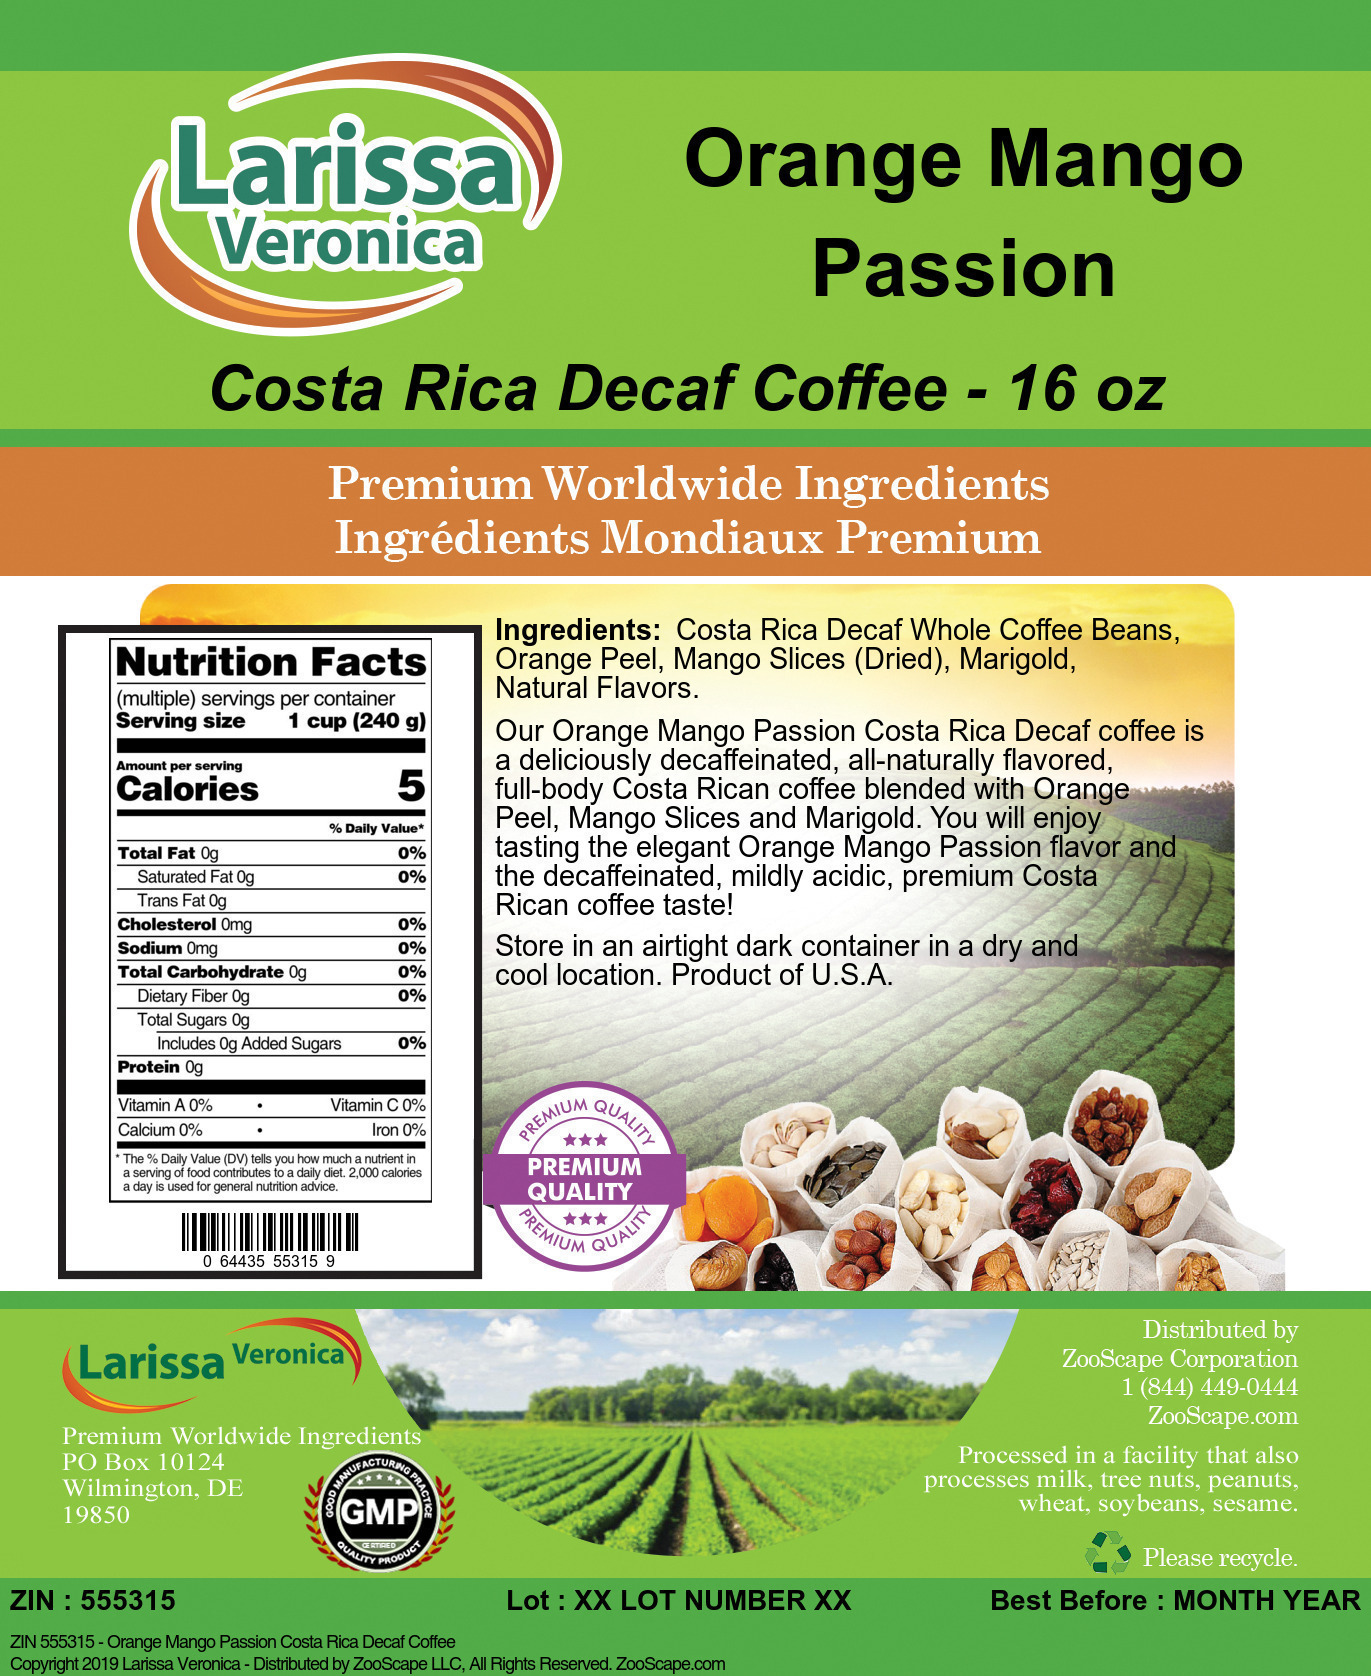 Orange Mango Passion Costa Rica Decaf Coffee - Label